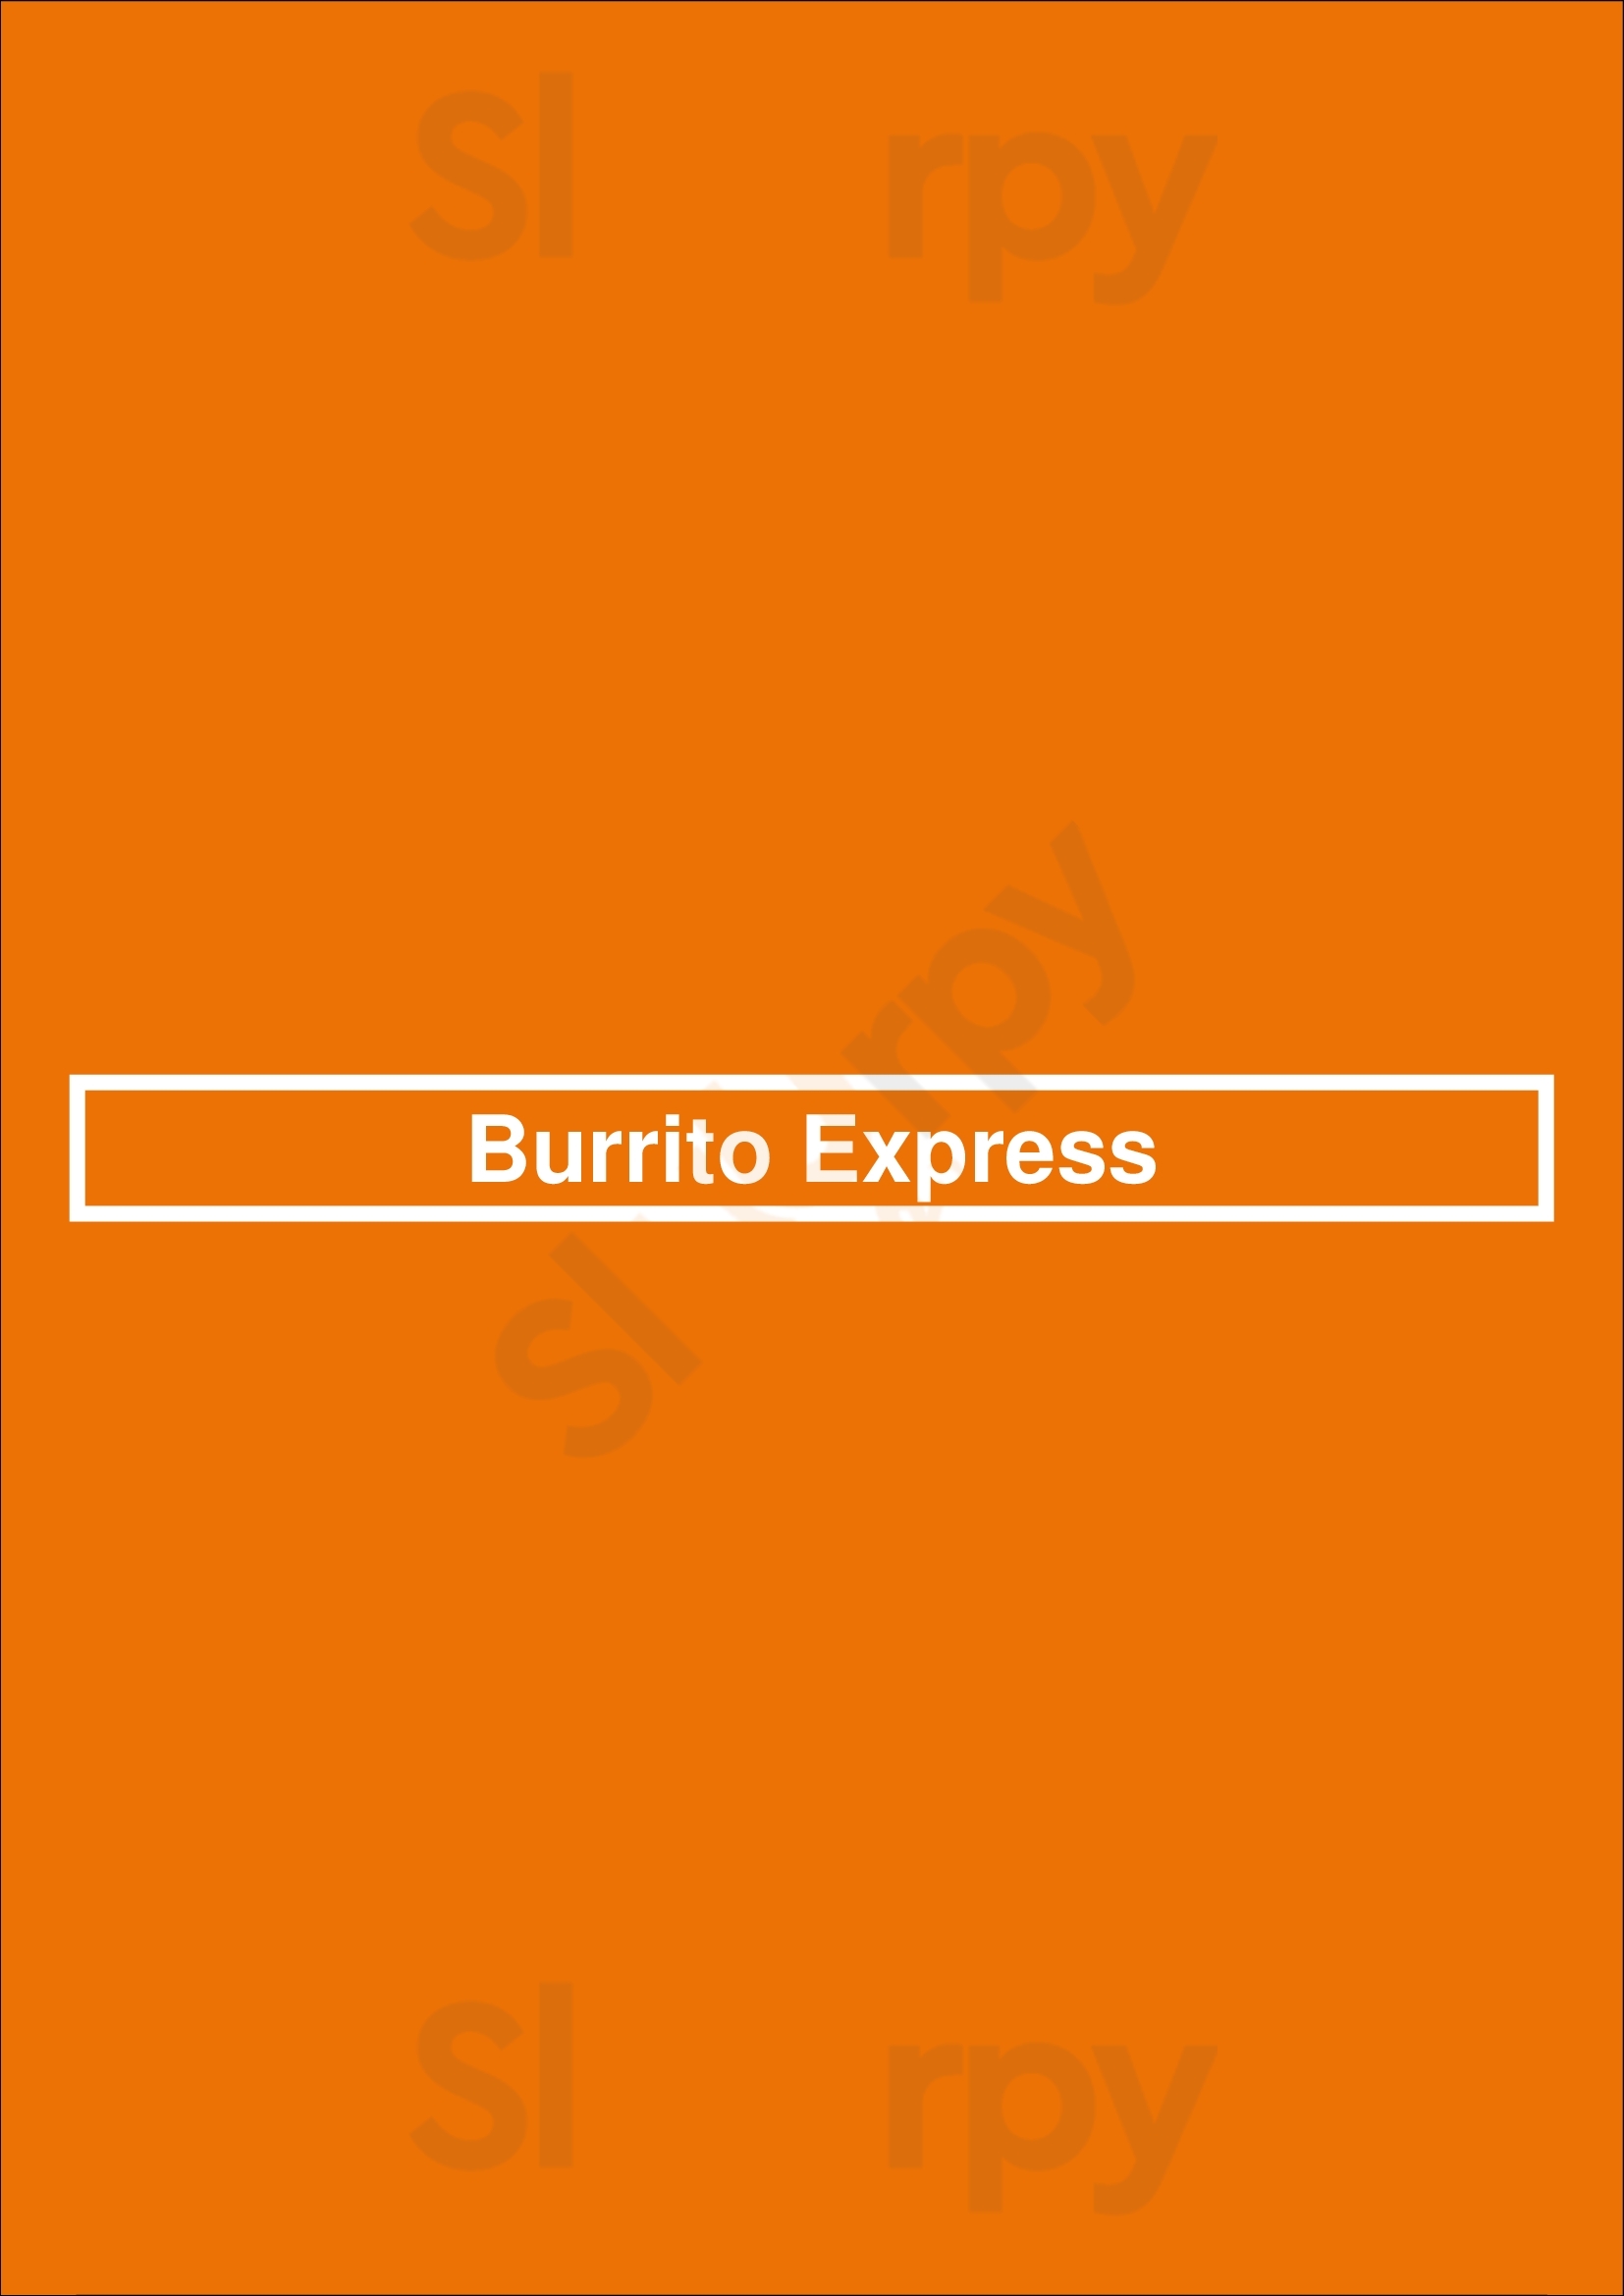 Burrito Express Pasadena Menu - 1